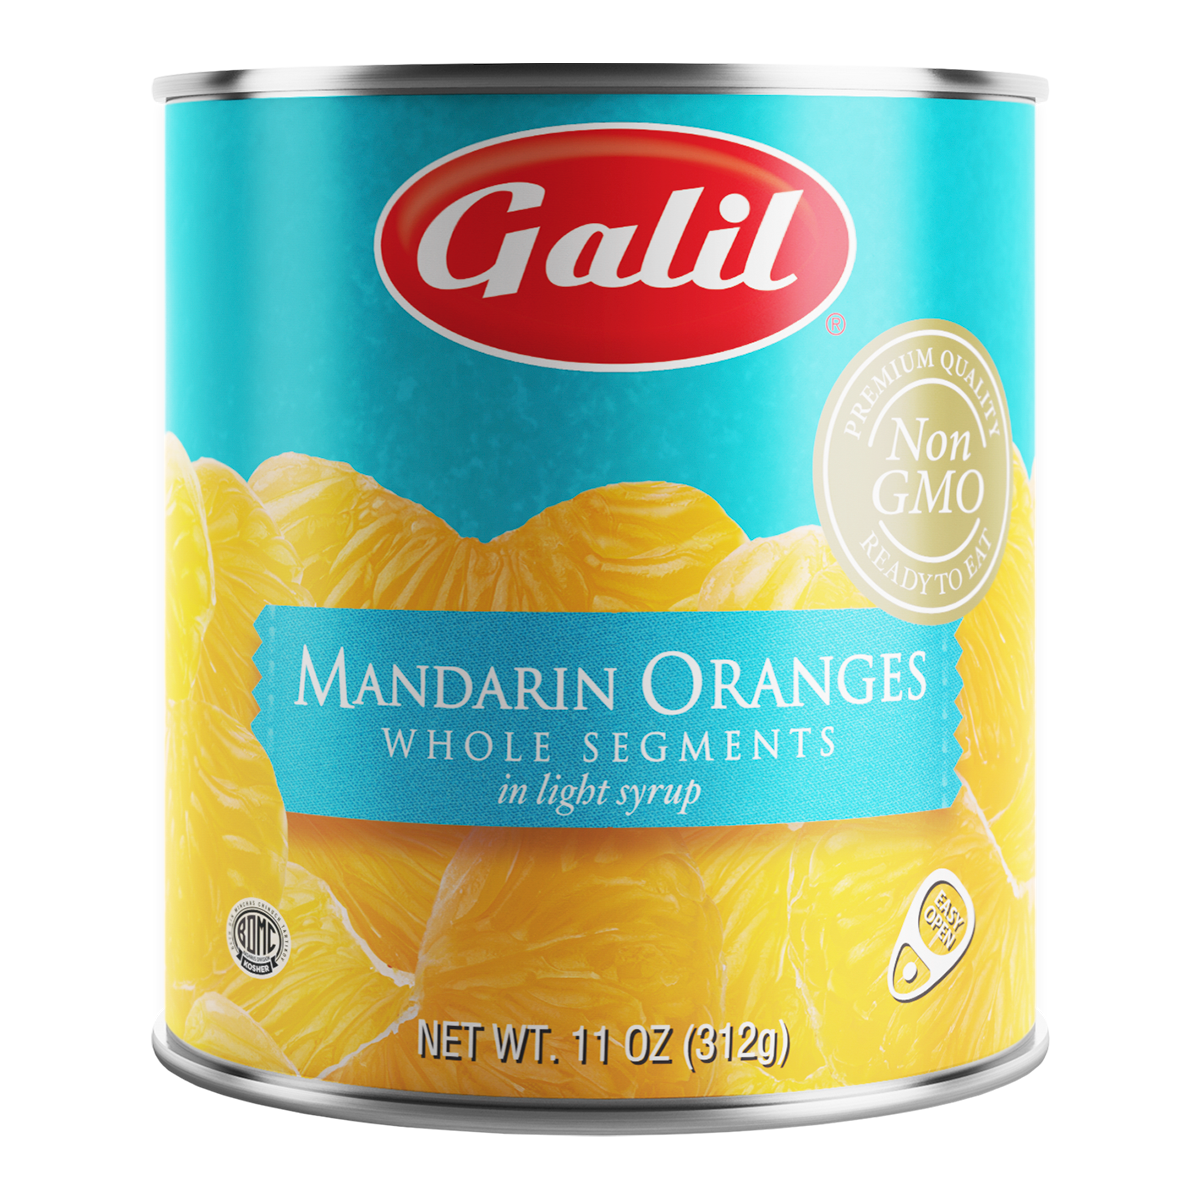 Mandarin Oranges | Wholes in Light Syrup | 11 oz | Galil